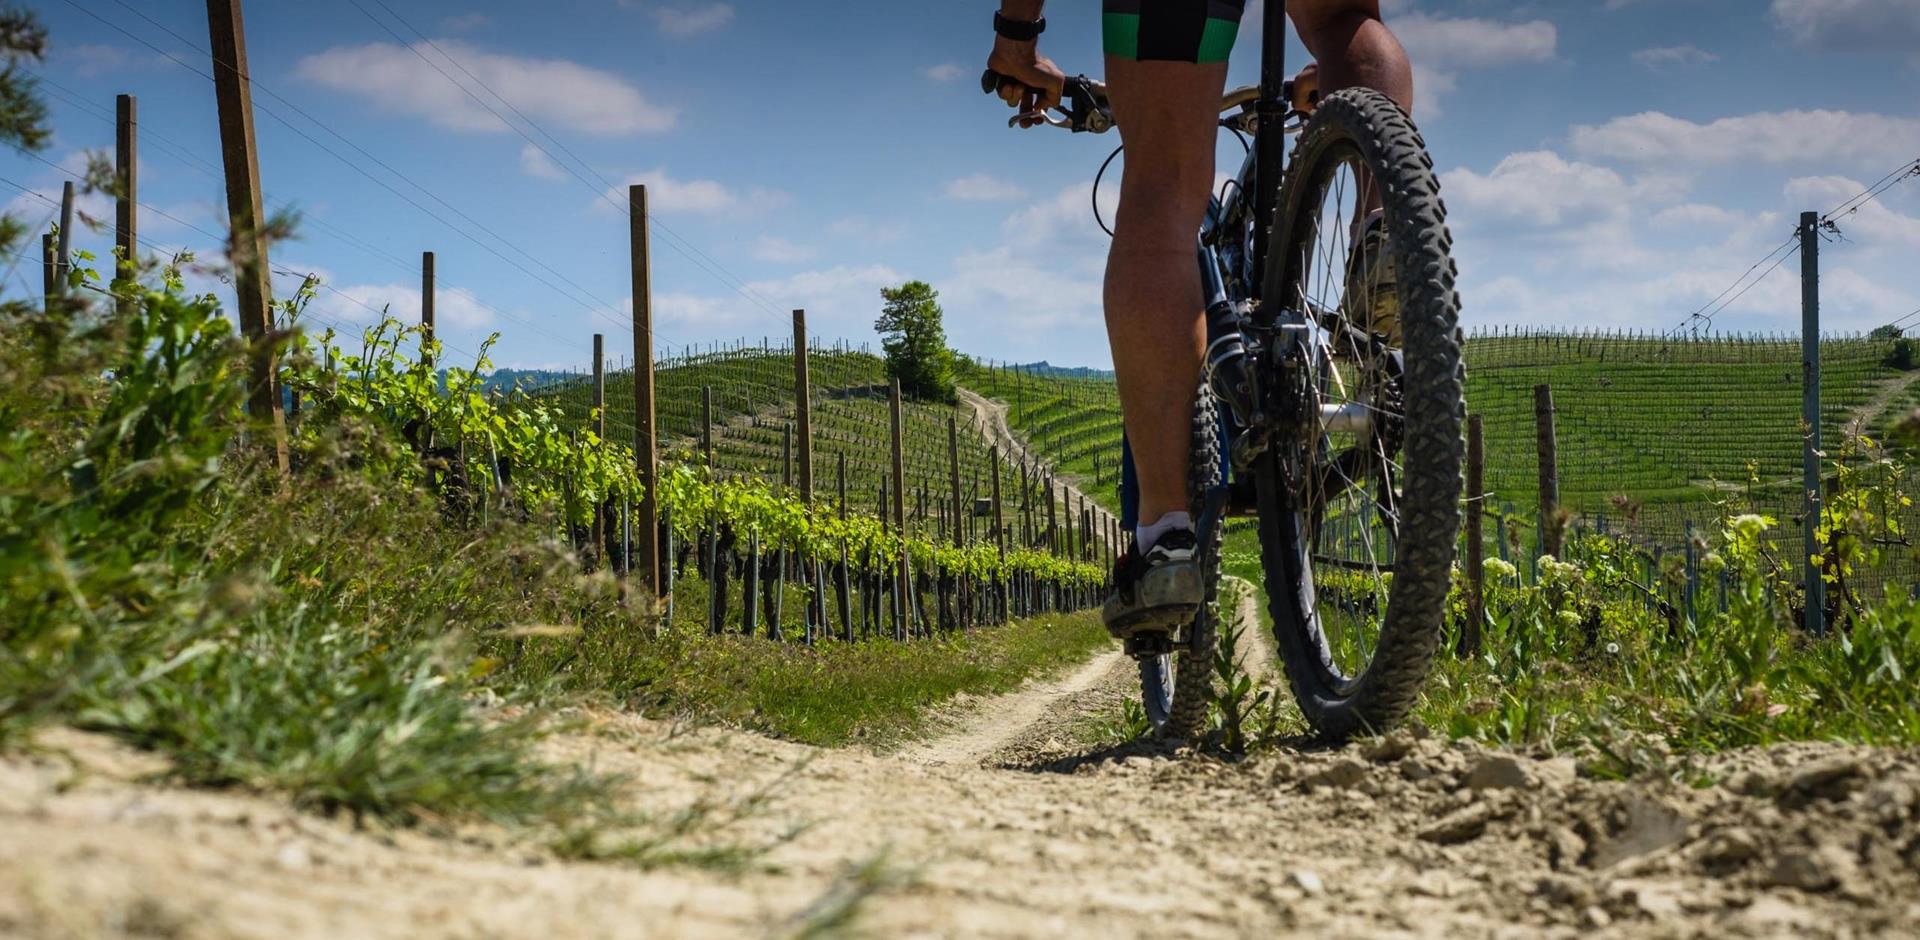 Cycle through Sonoma’s vineyards